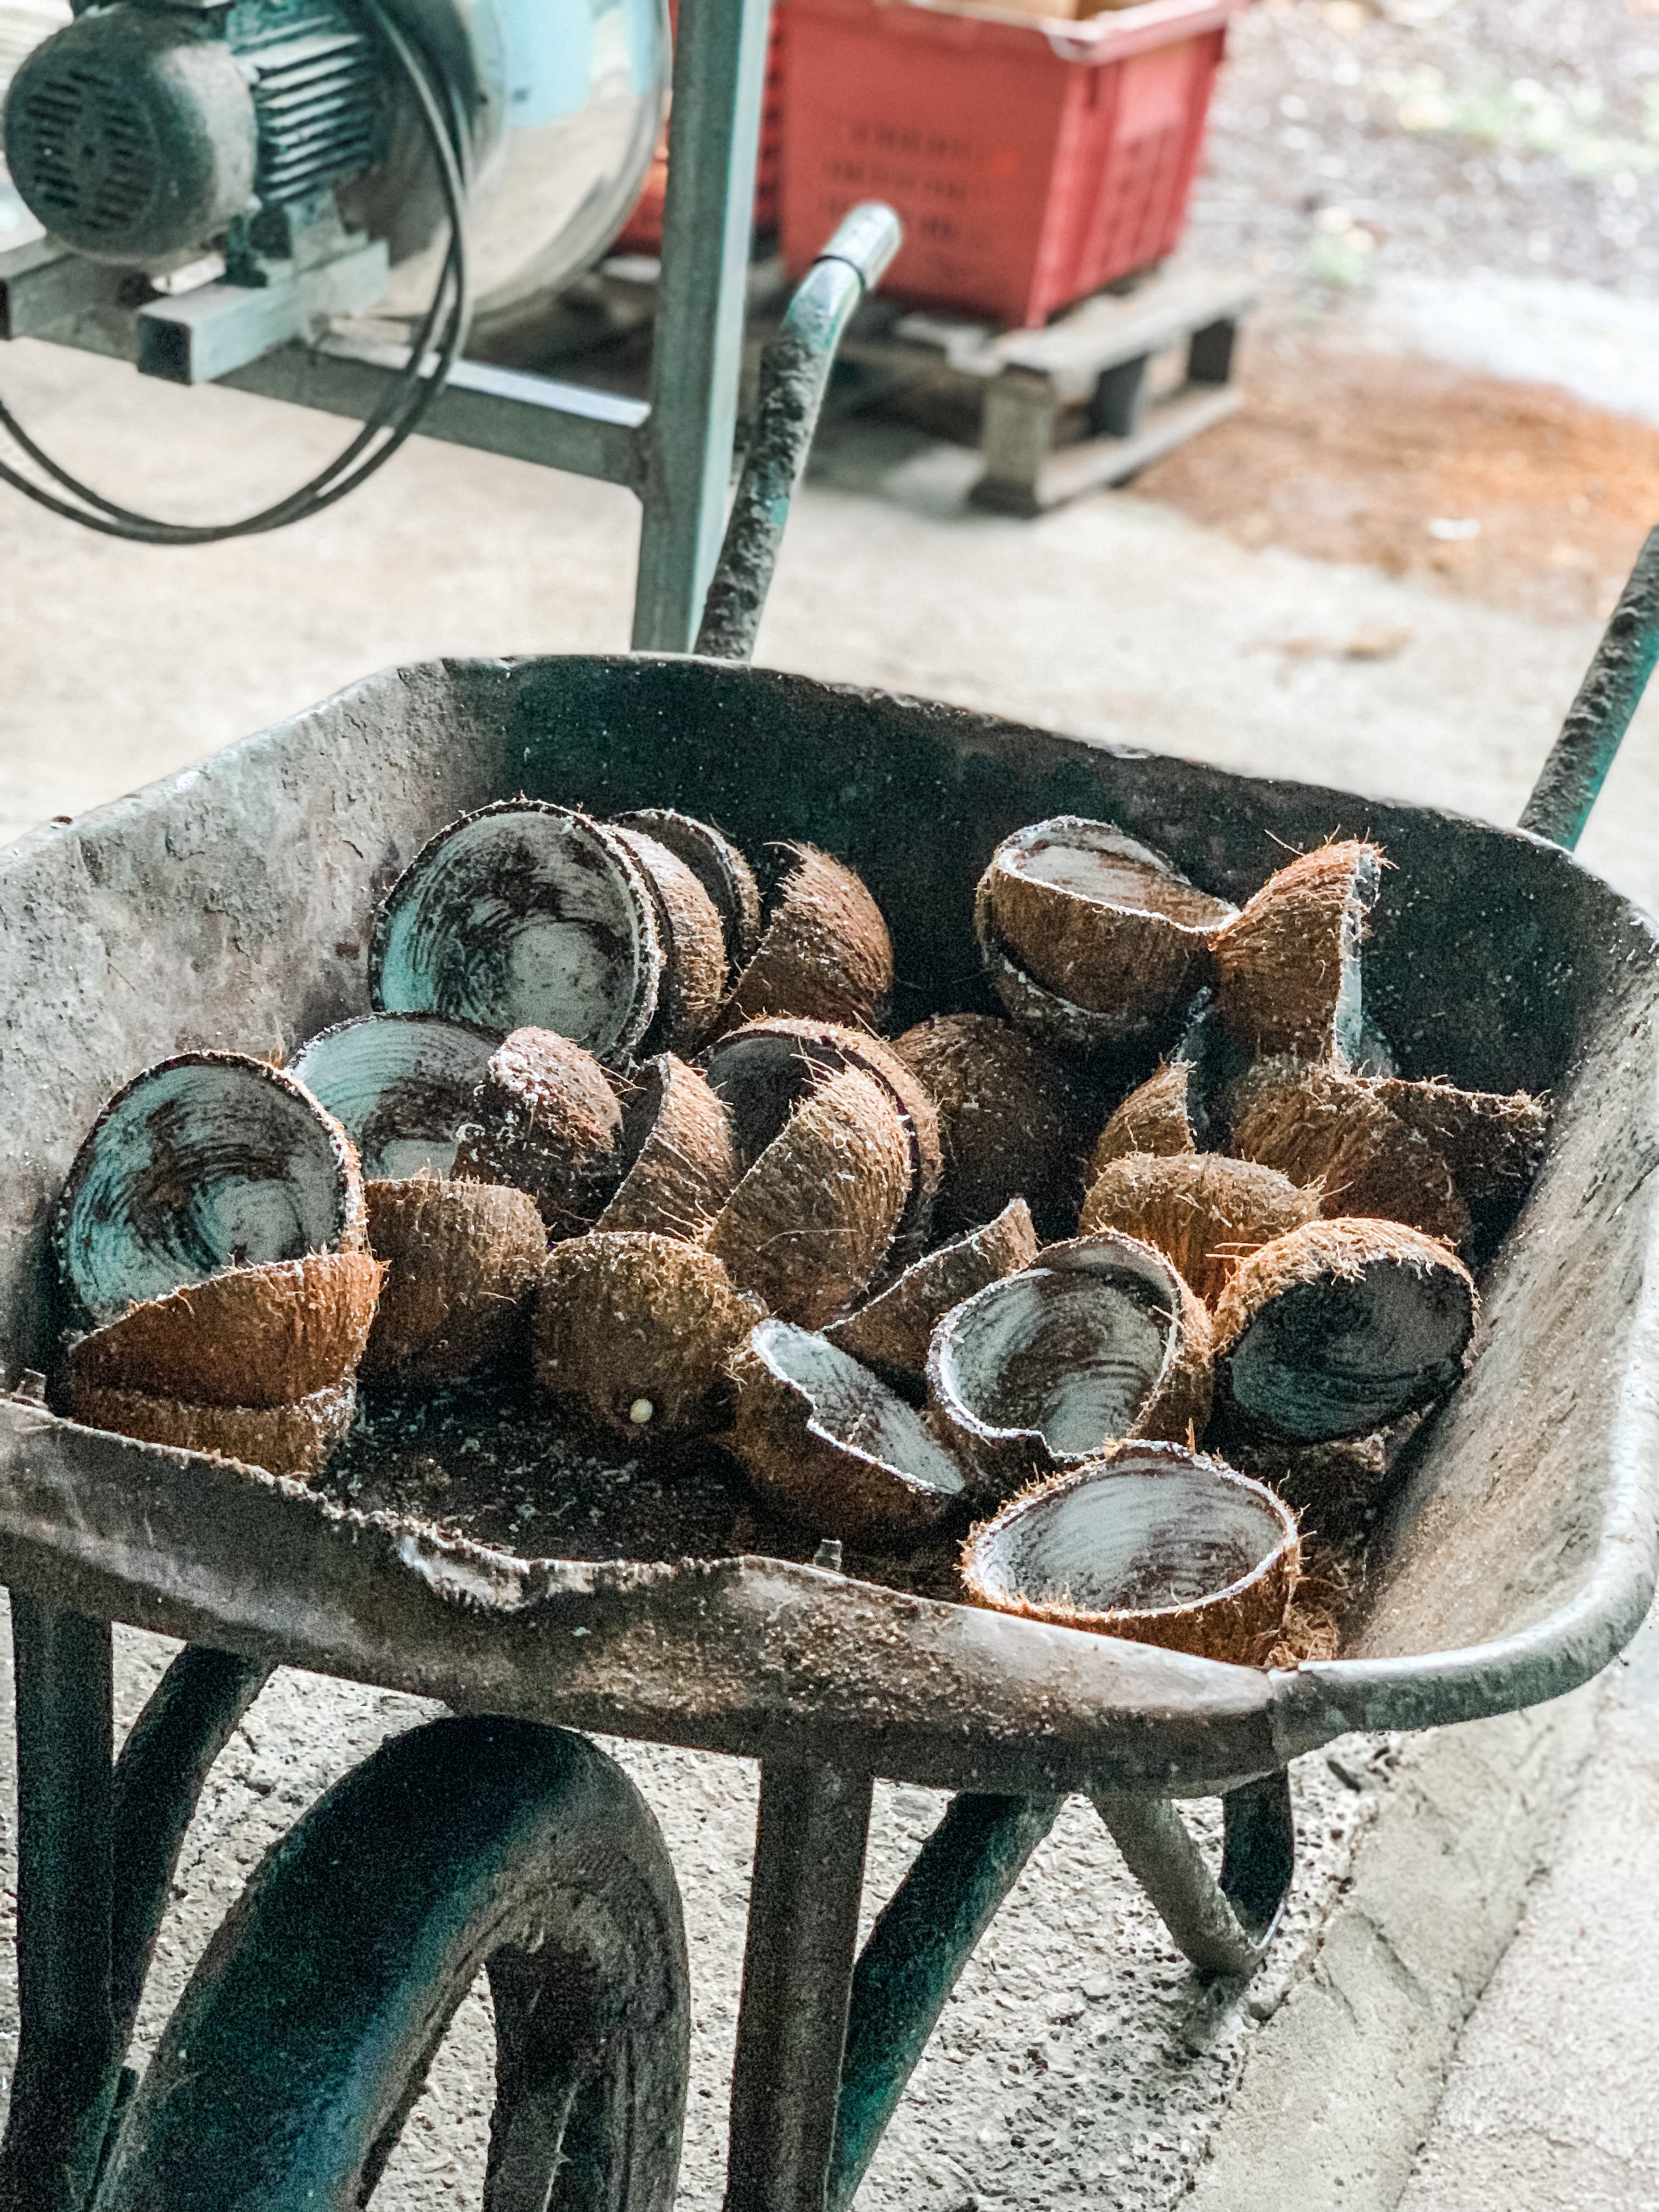 Coconuts at Distillerie de Taha’a where they serve Domaine Pari Pari